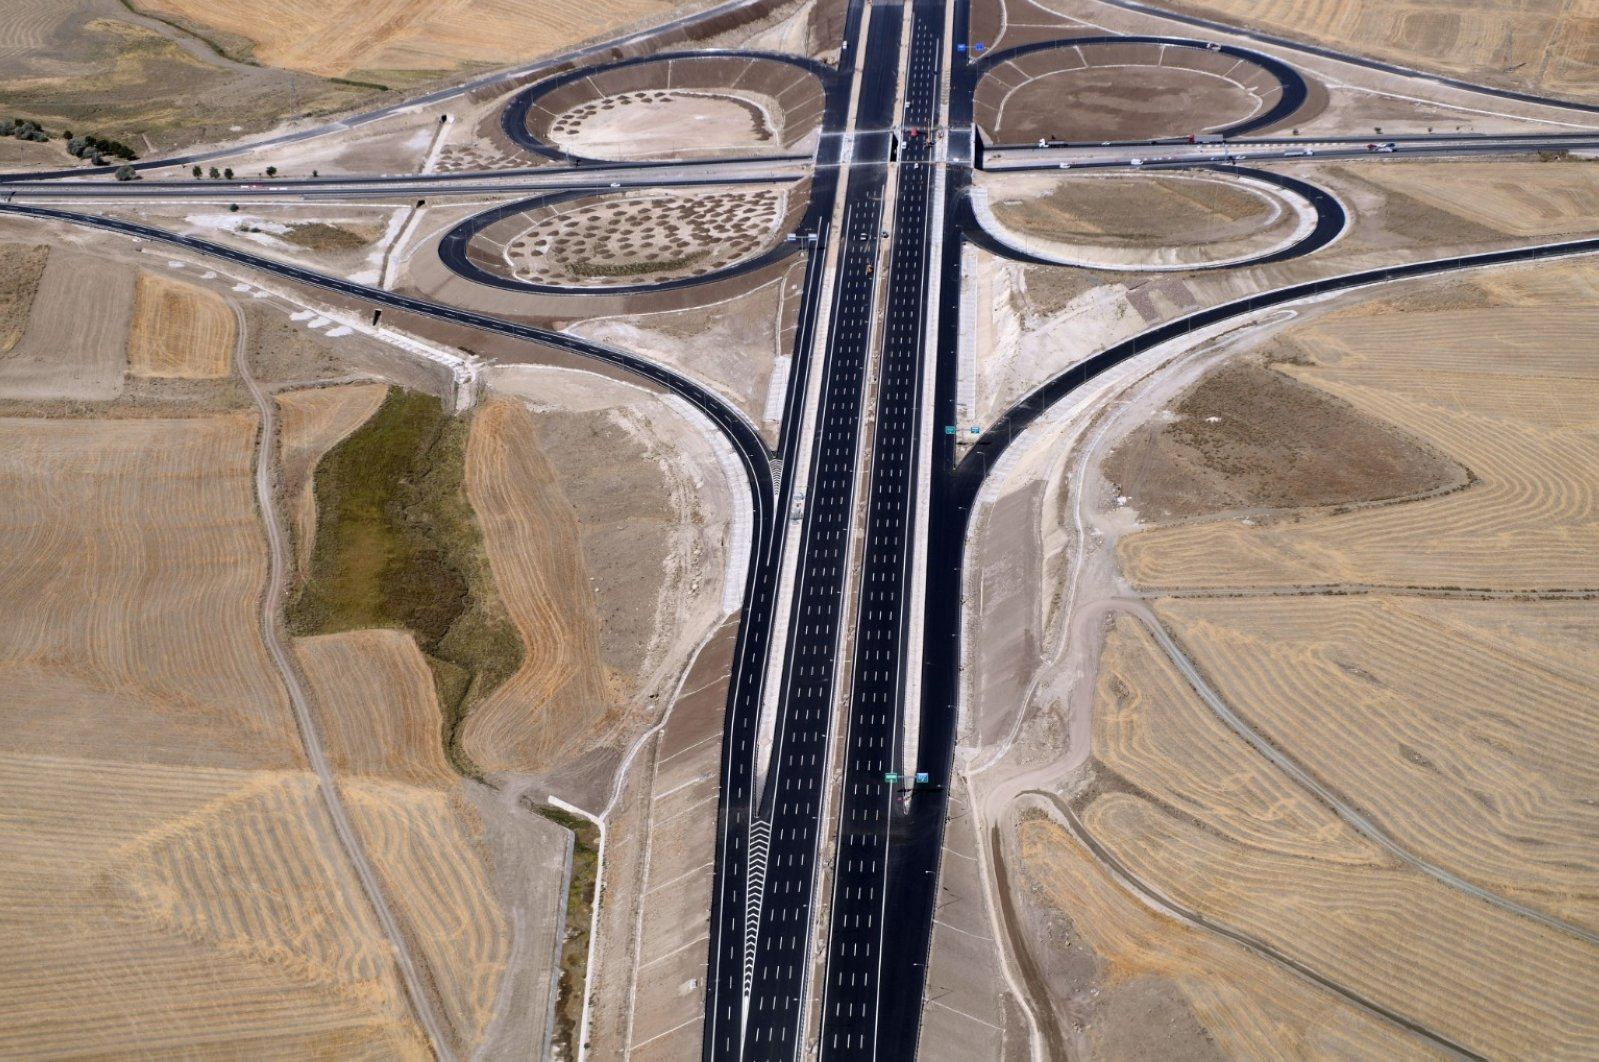 Turkey's ‘smartest’ highway to connect Ankara, Niğde